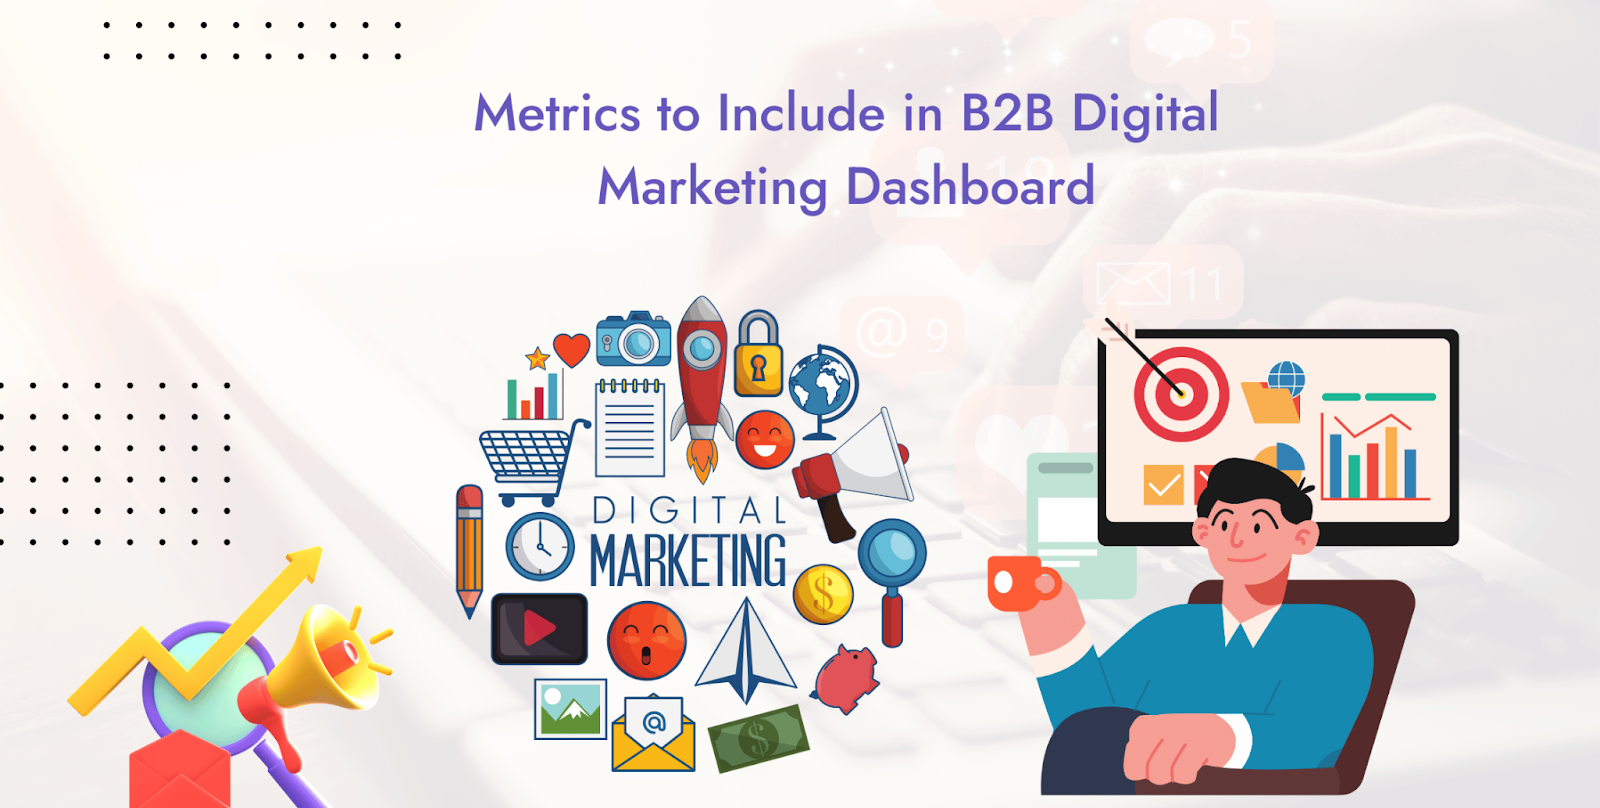 Metrics to Include in B2B Digital Marketing Dashboard